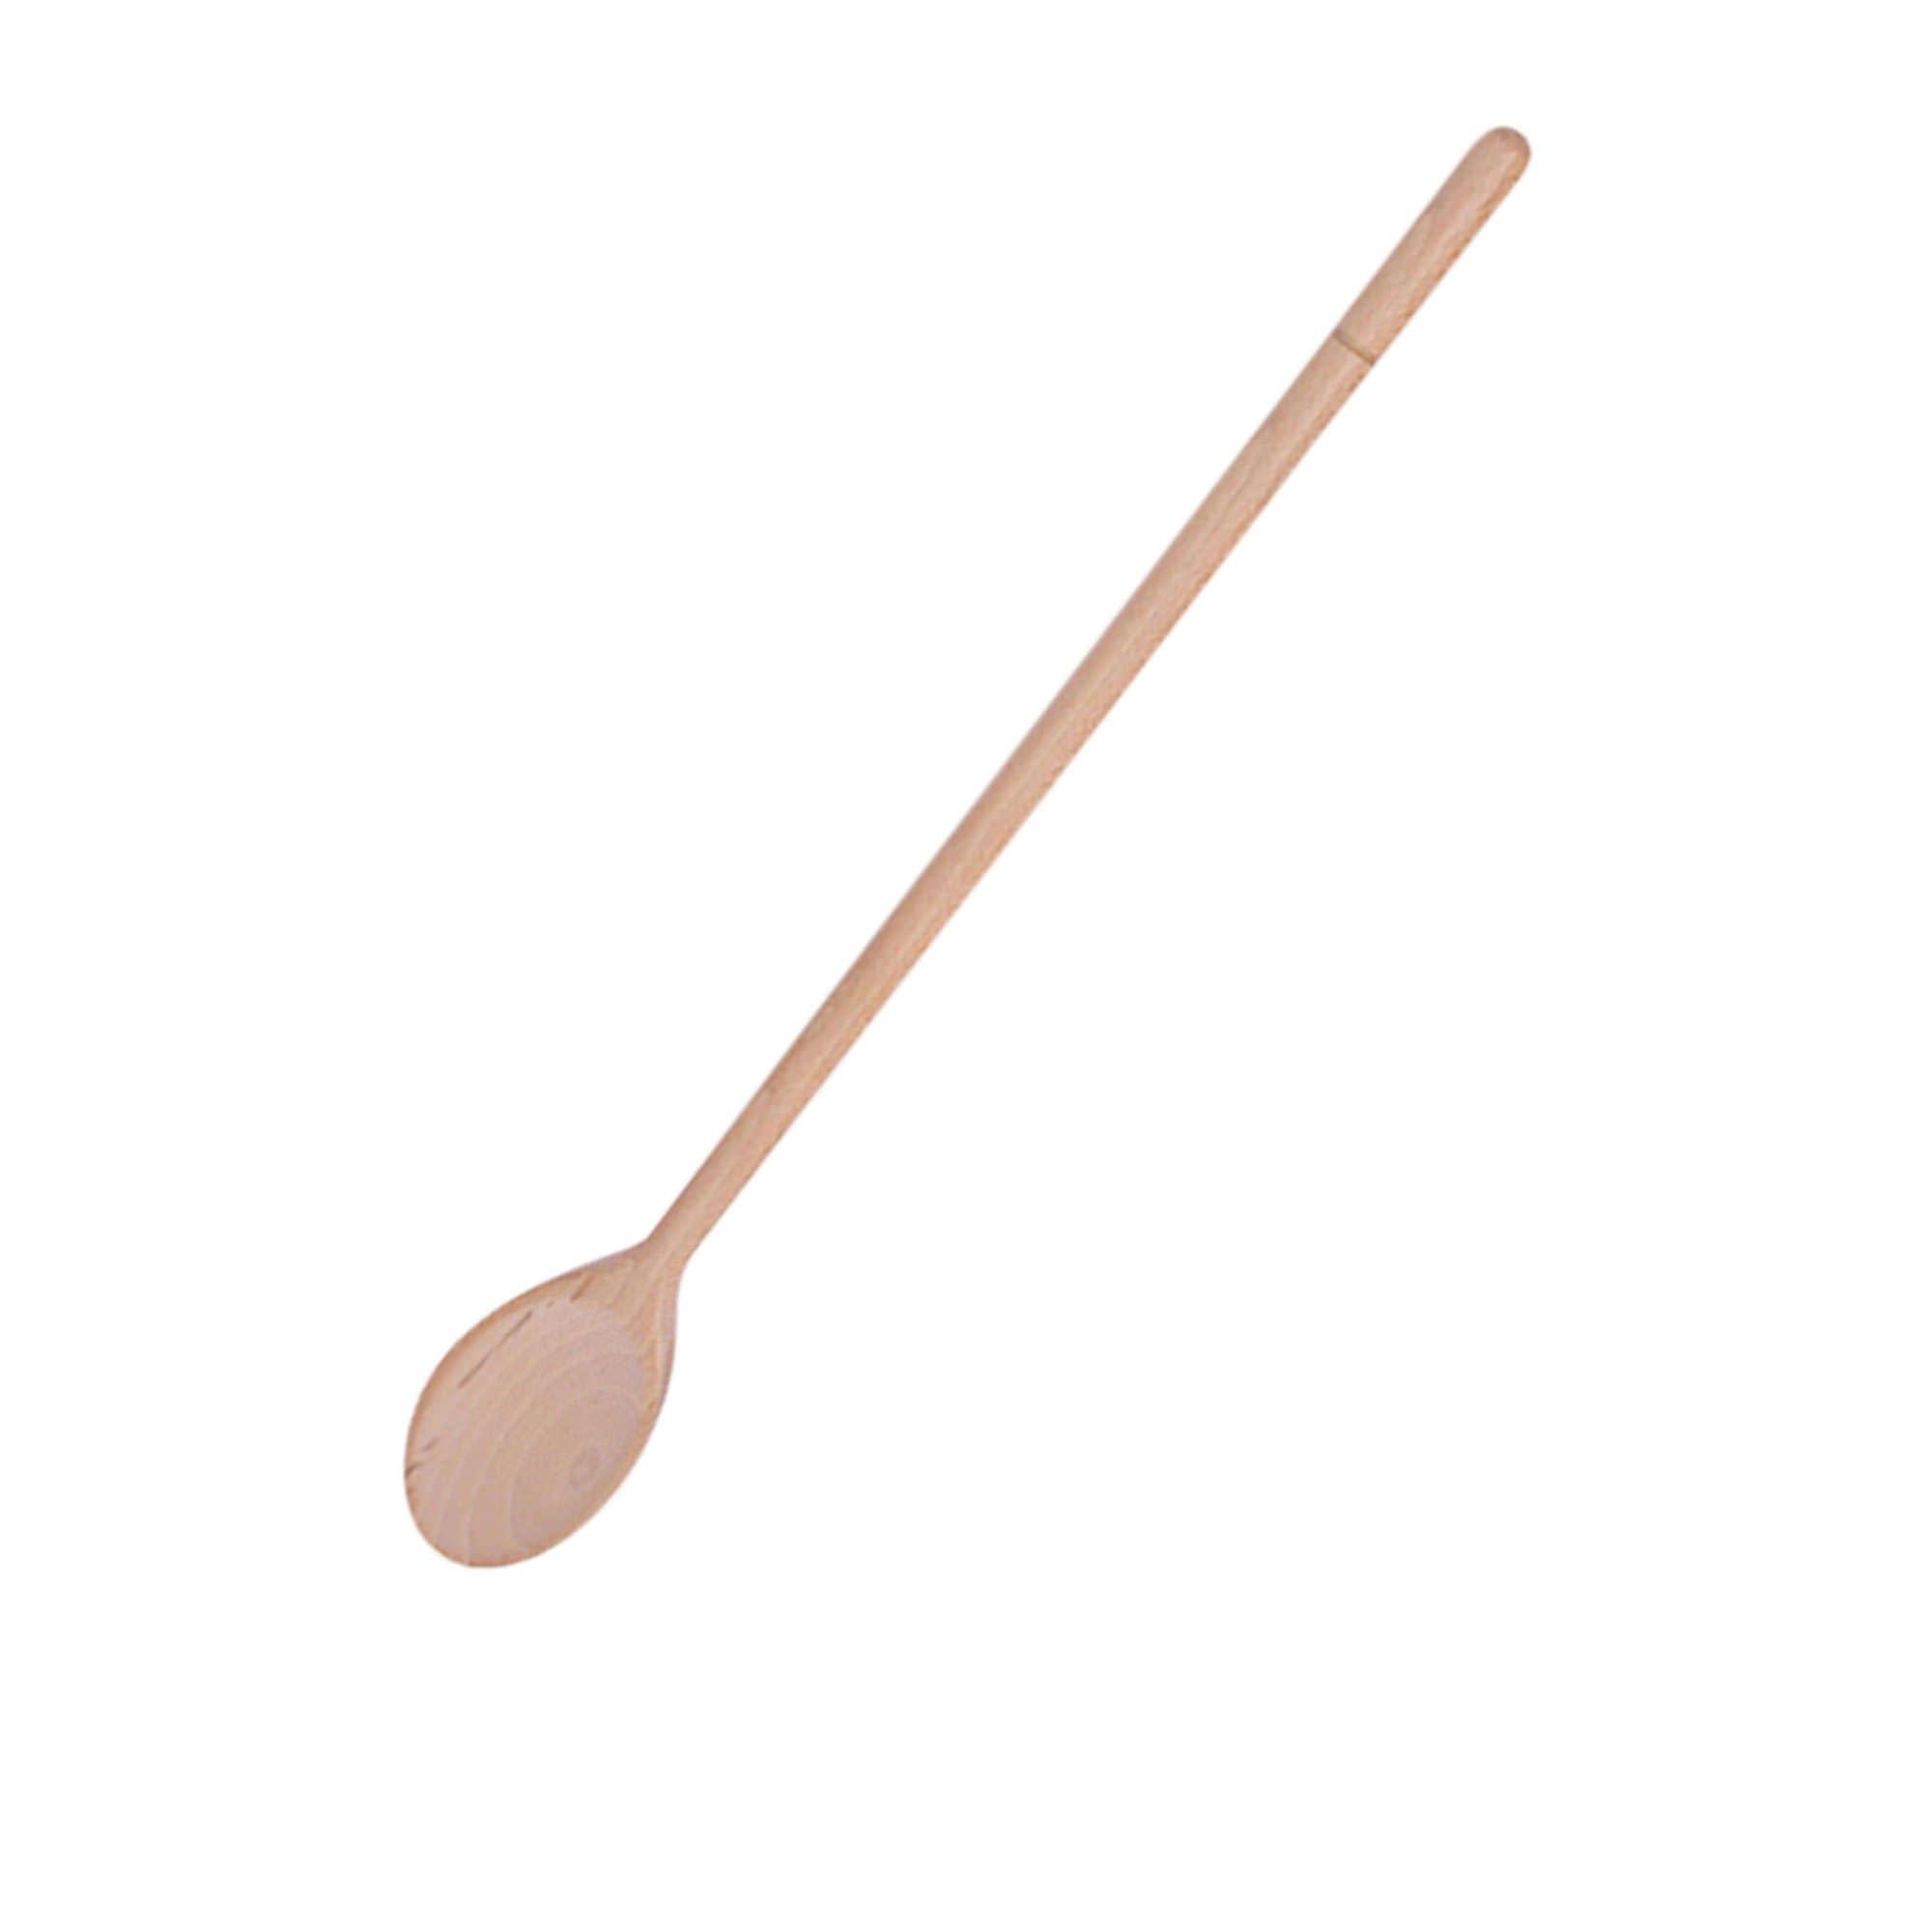 Mondo Wooden Spoon 30cm Image 2